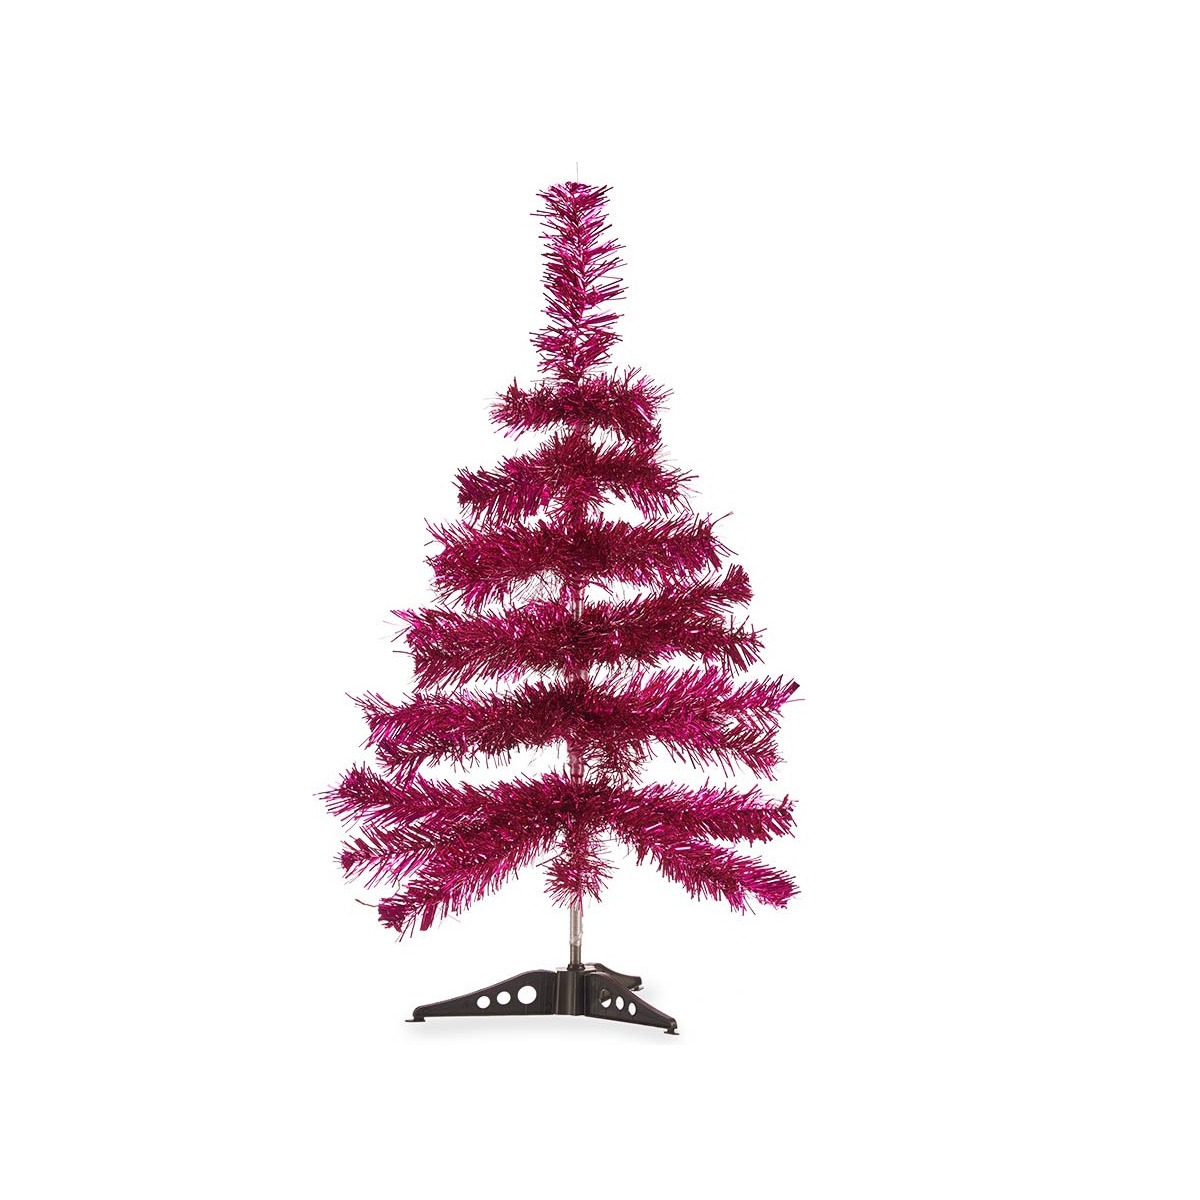 Kunstboom-kunst kerstboom -fuchsia roze 60 cm klein model